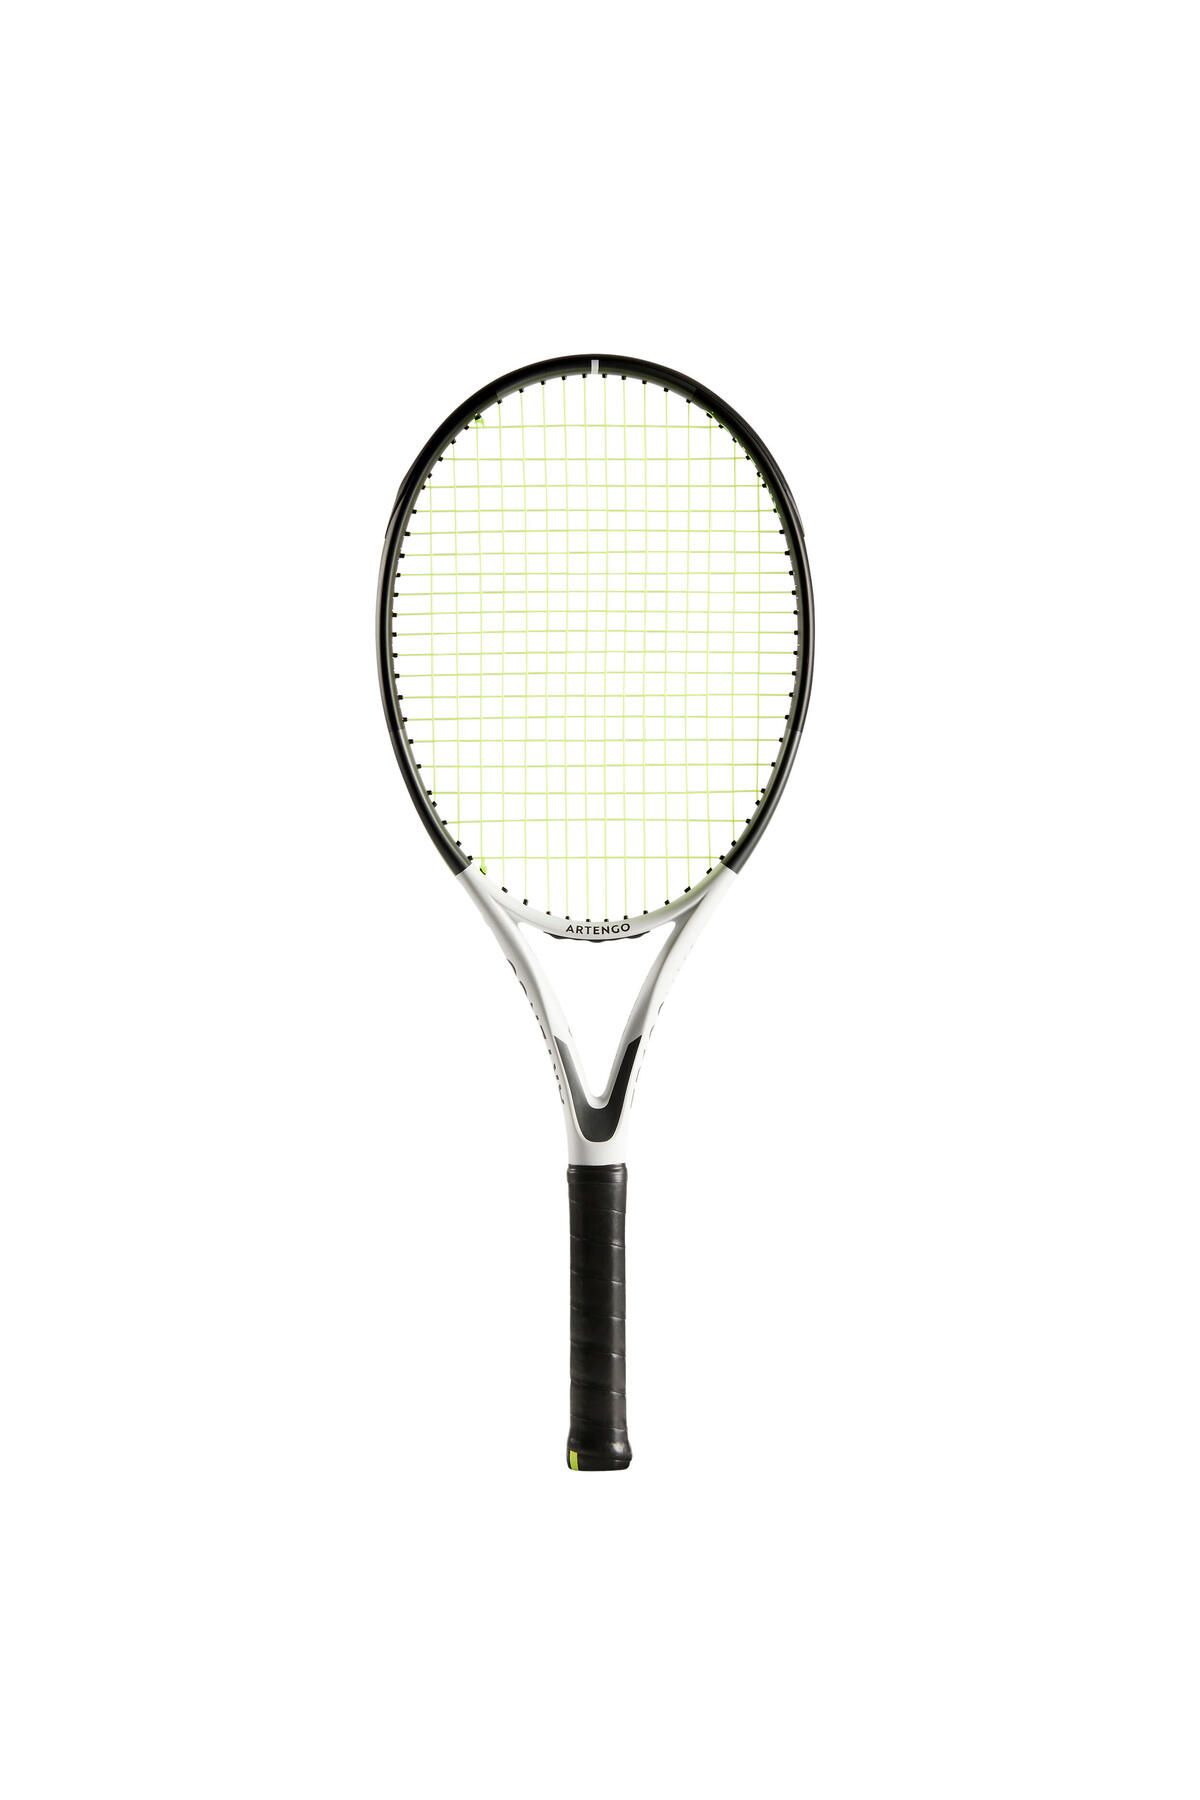 Decathlon Artengo Tenis Raketi - Yetişkin - Tr190 Lıte V2